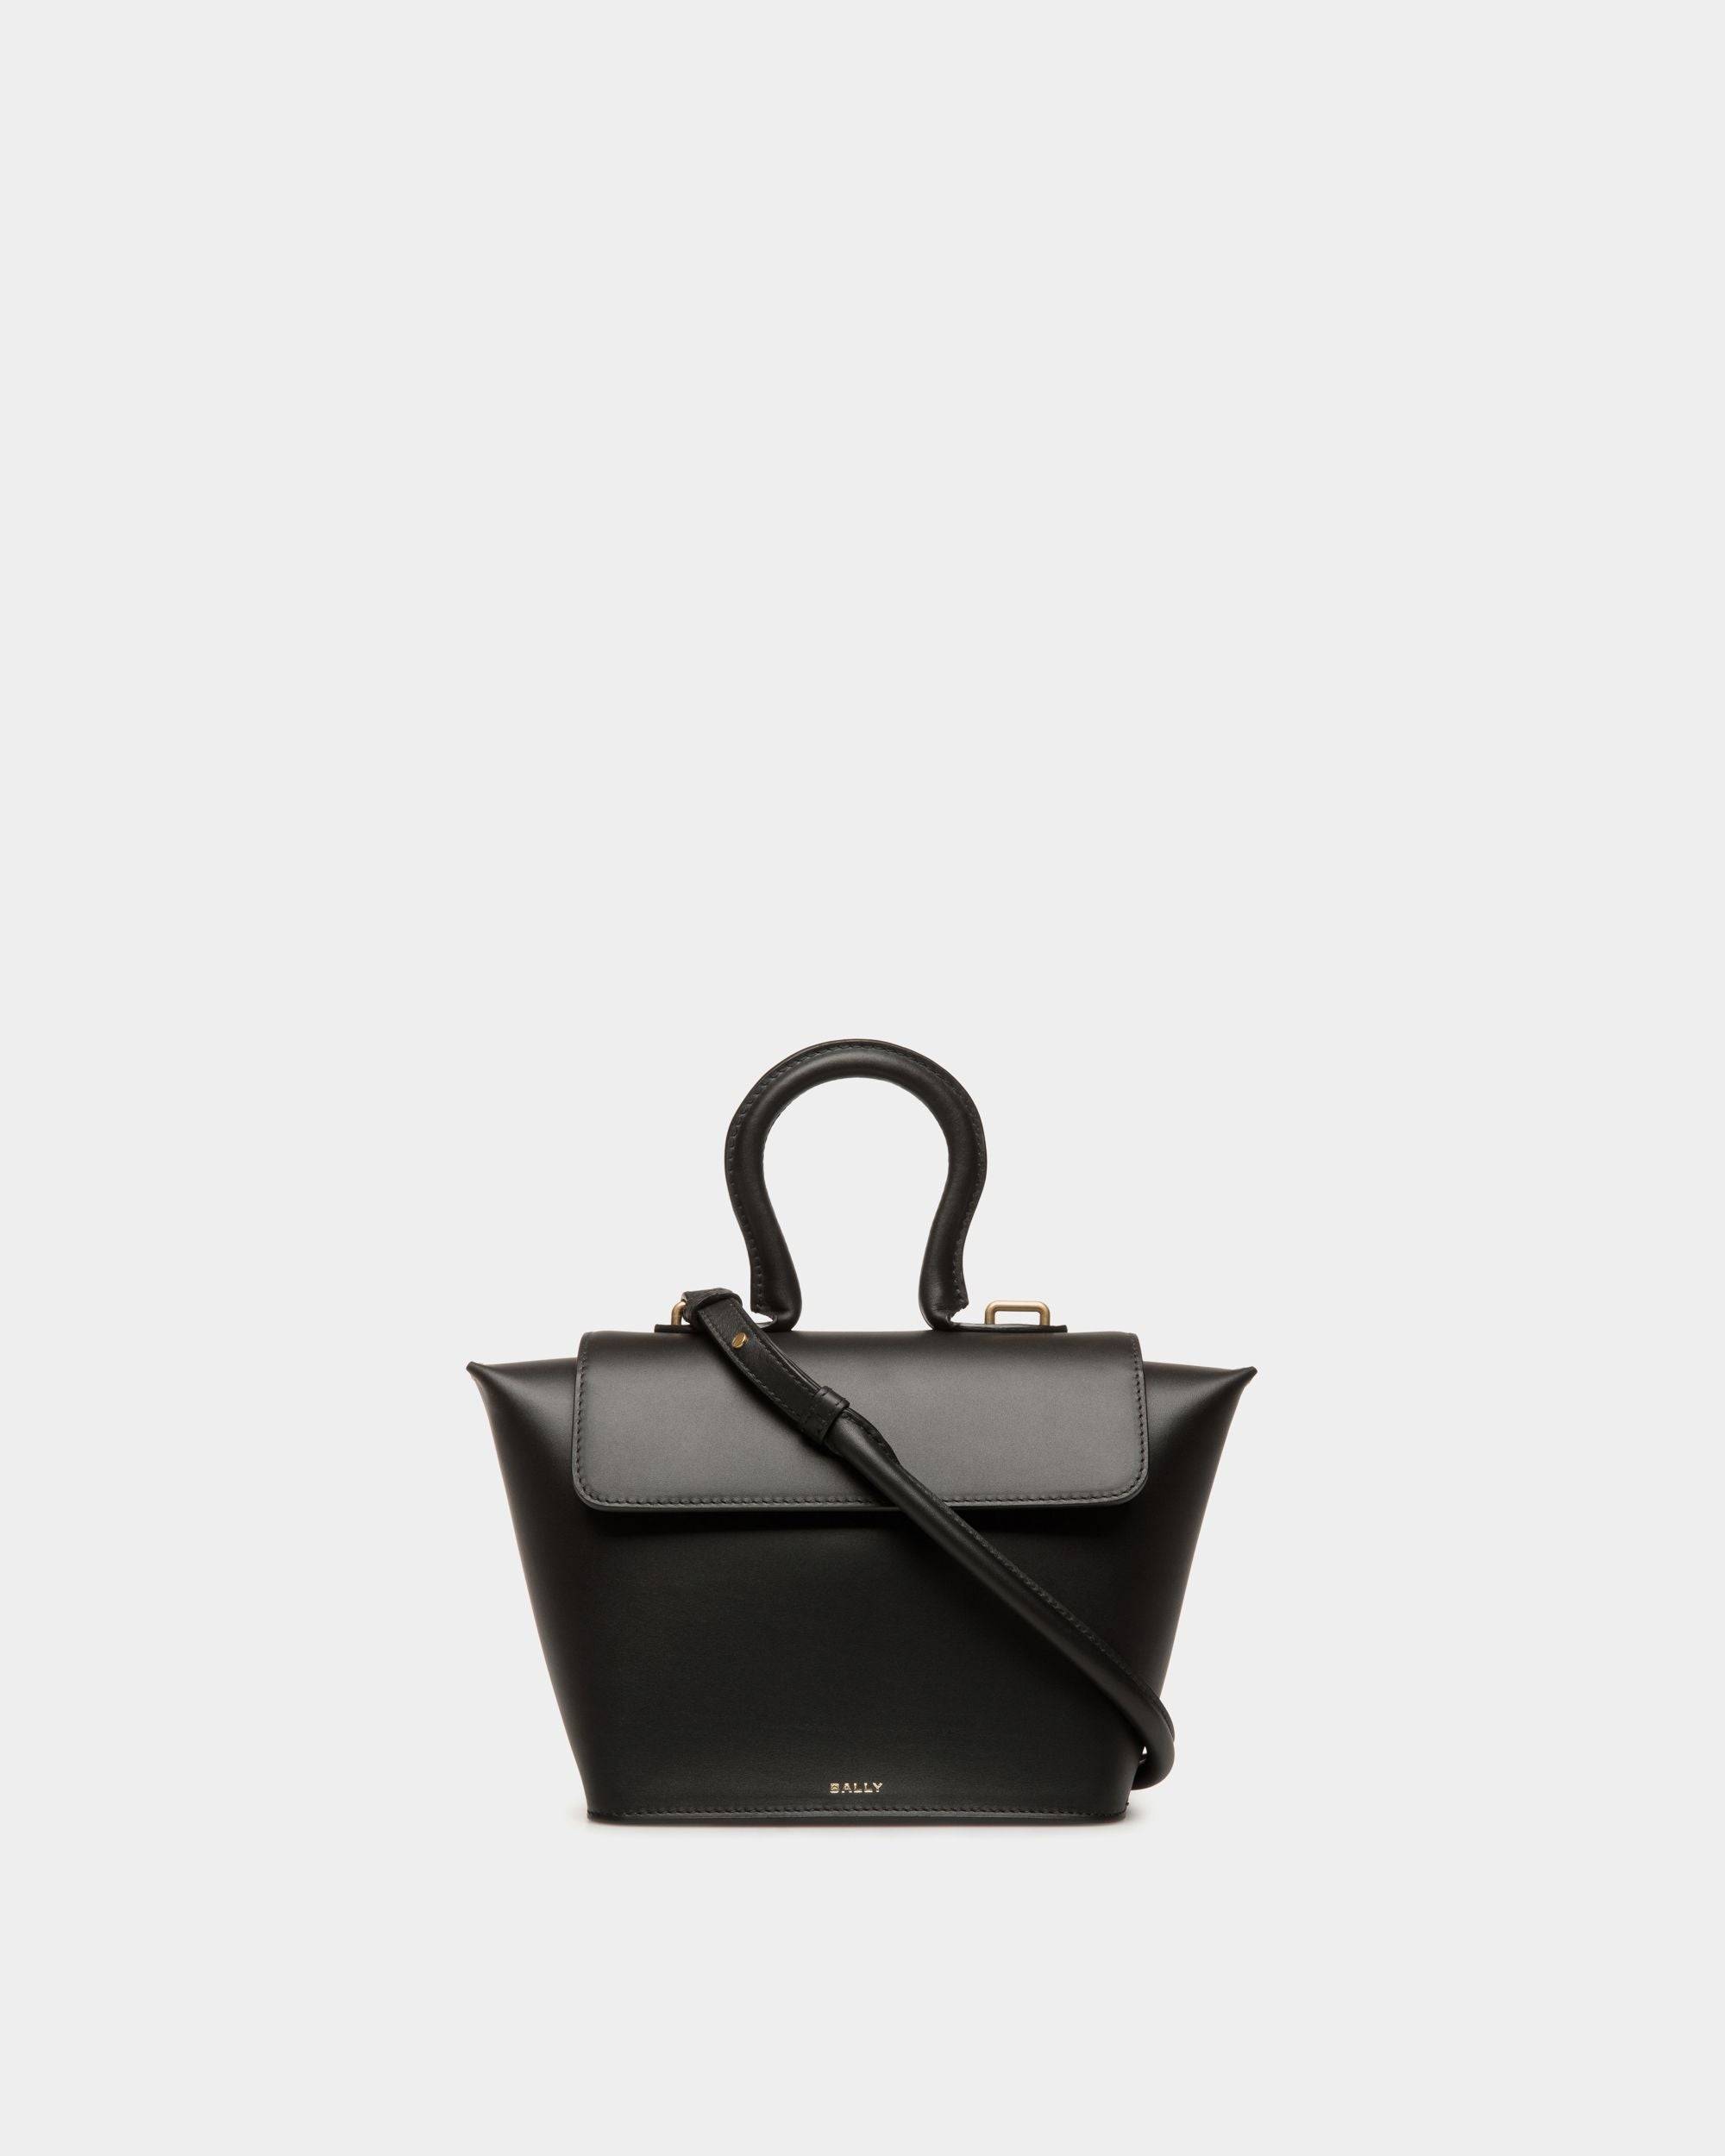 Valentino Garavani Designer Purses & Handbags for Women | Valentino US